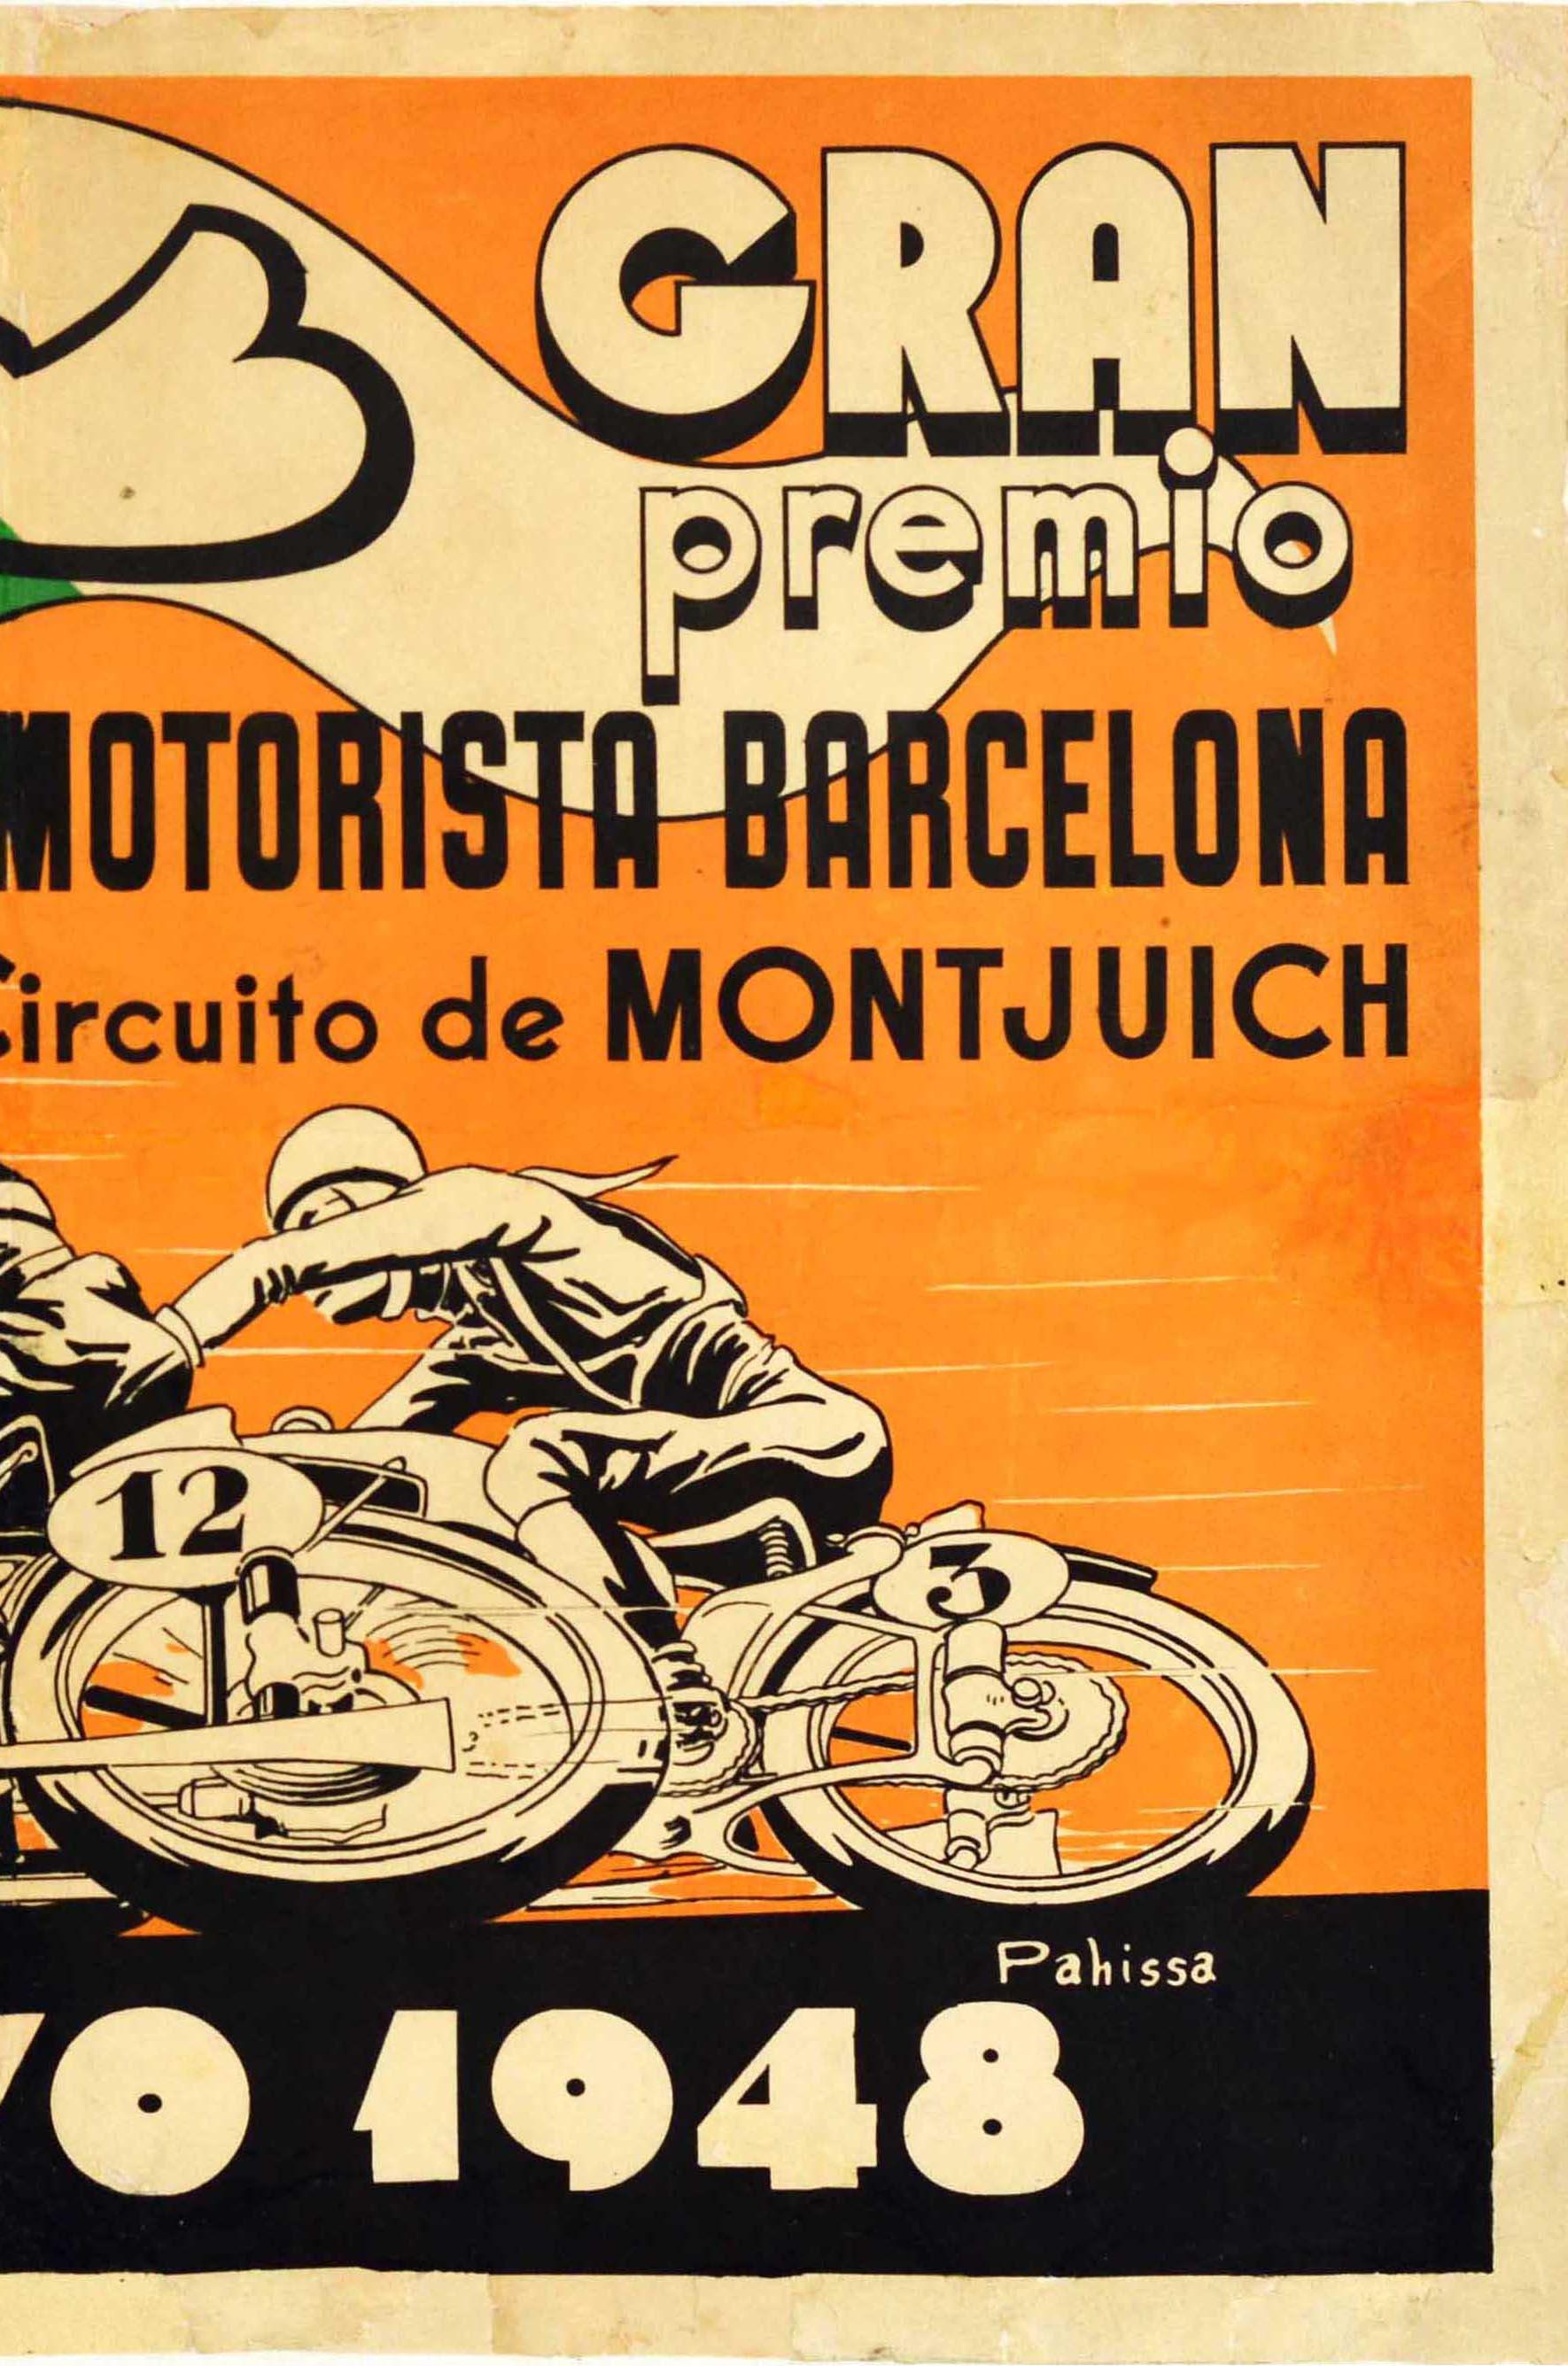 Original Vintage Motorsport Poster Gran Premio Pena Motorista Barcelona Montjuic - Orange Print by Pahissa